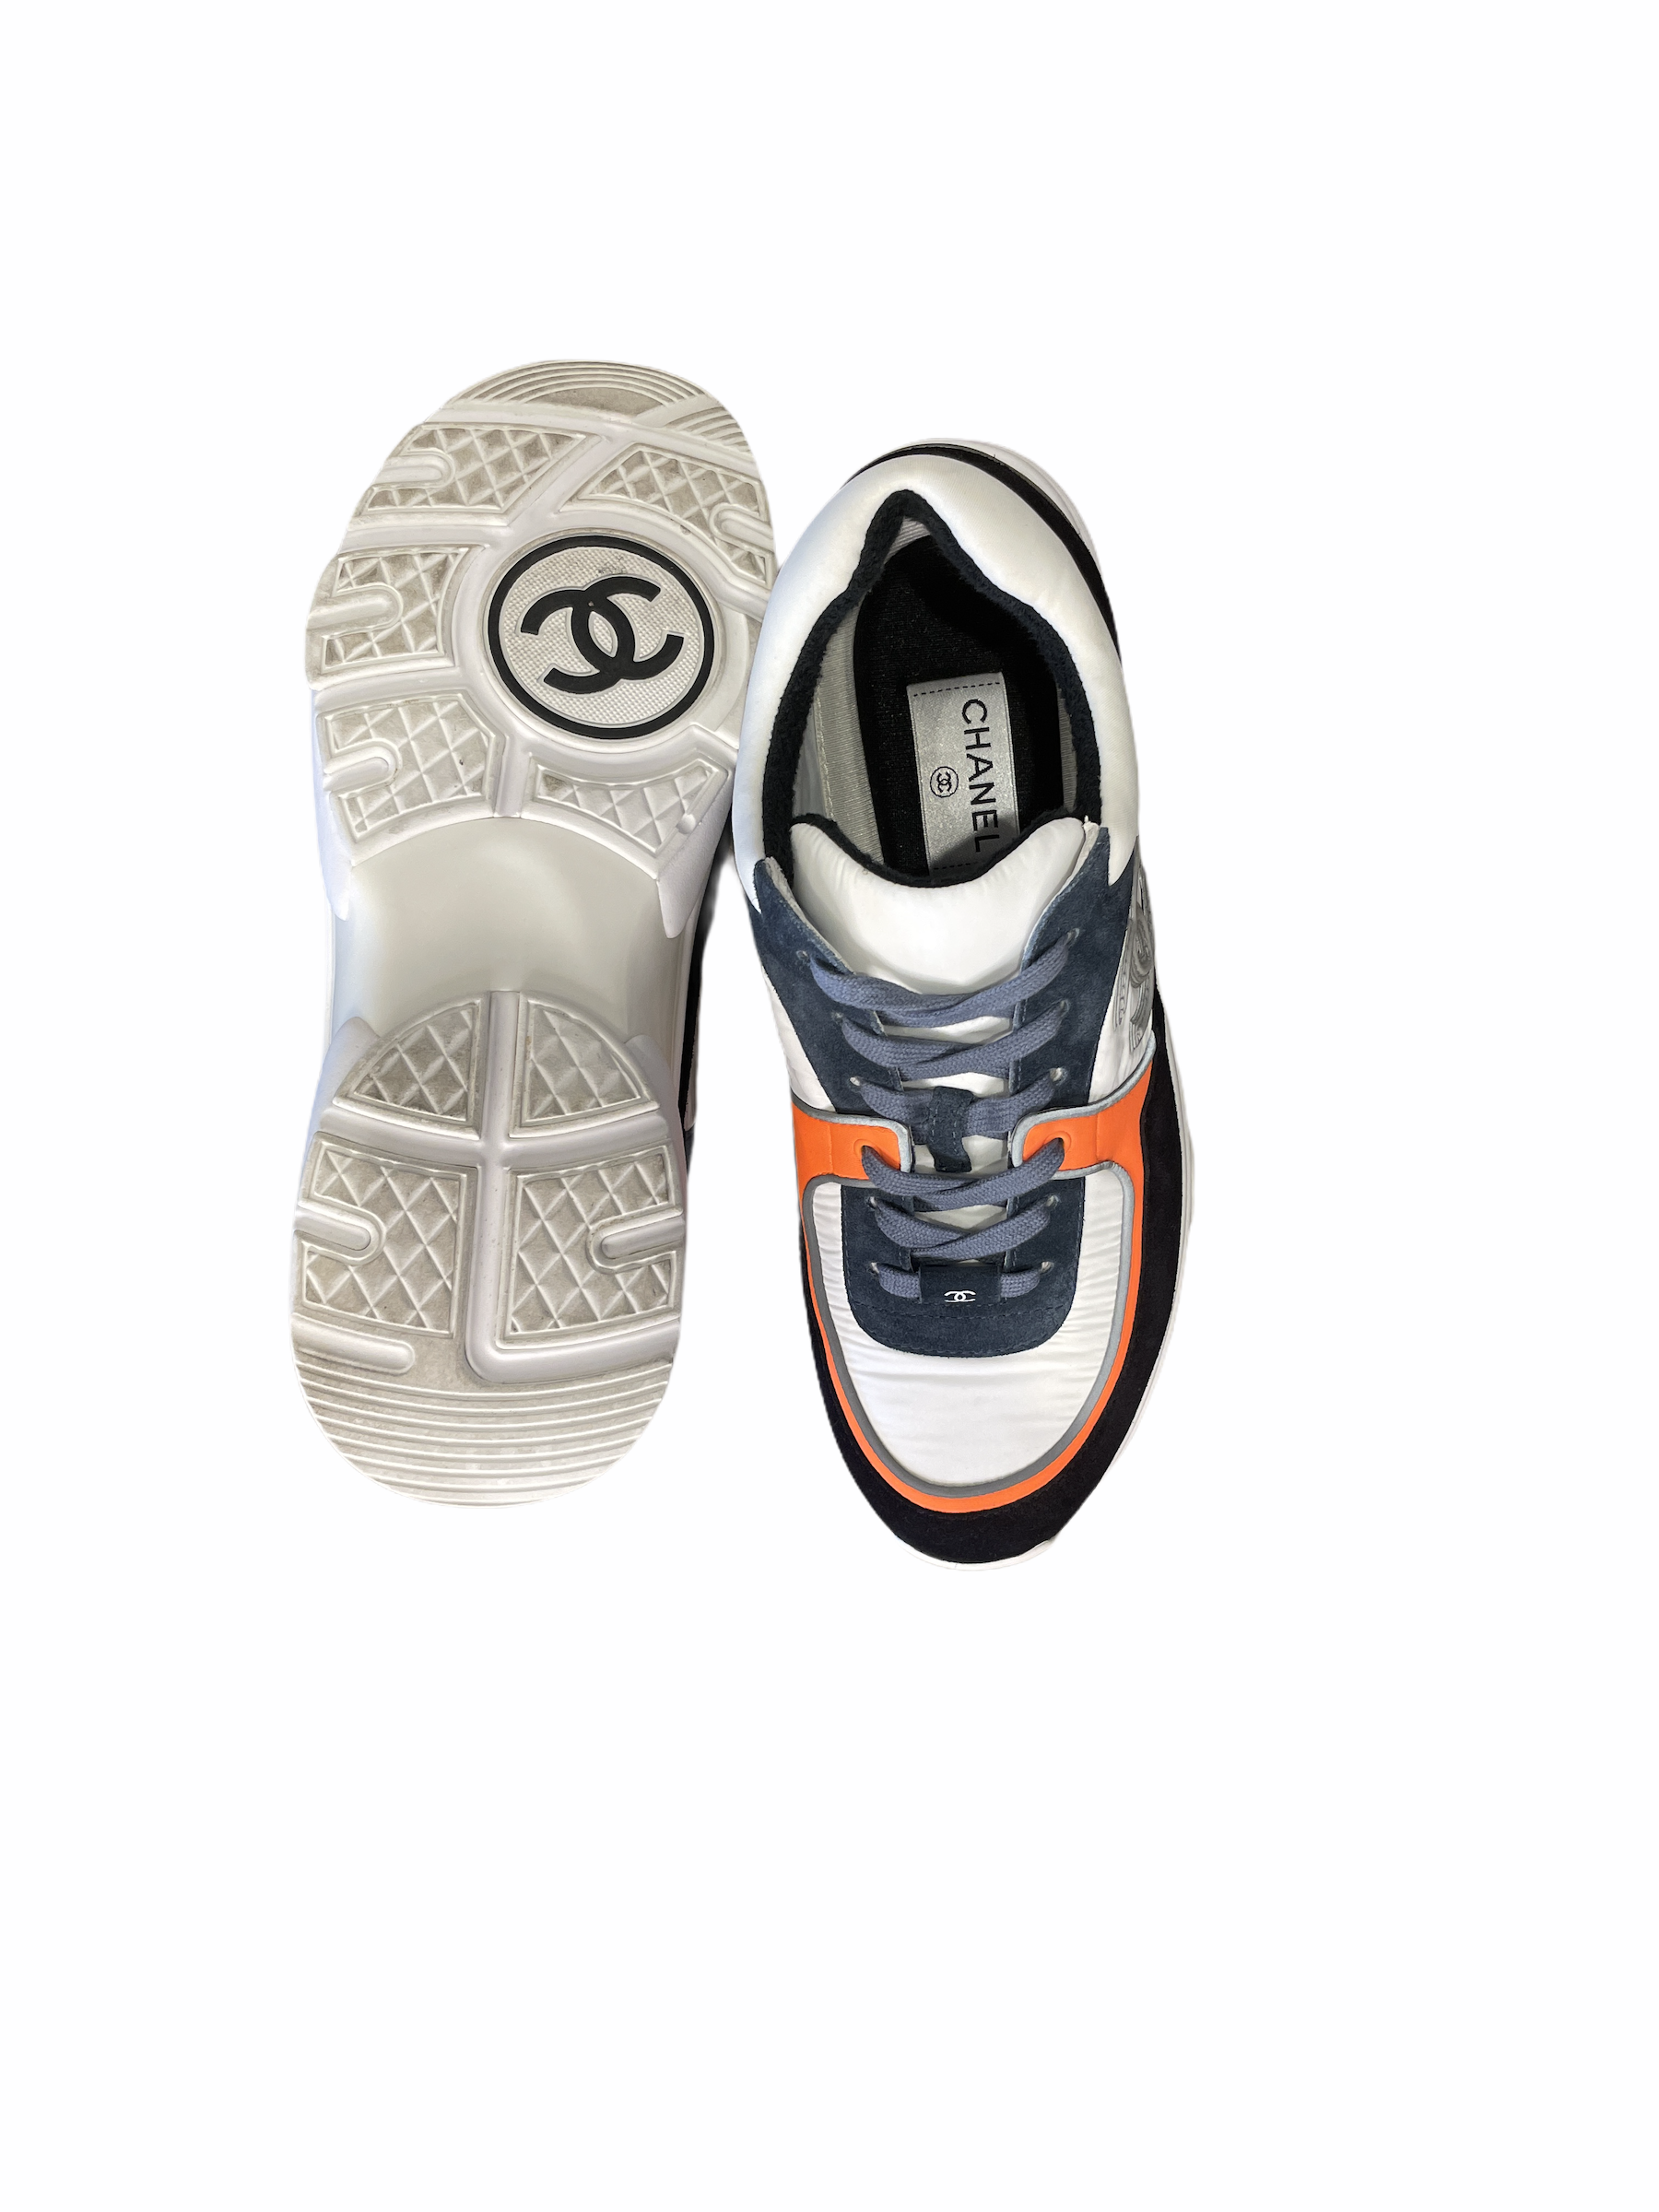 Buy Chanel Wmns Suede Calfskin Sneaker 'Sky Blue' - G37136 Y55131